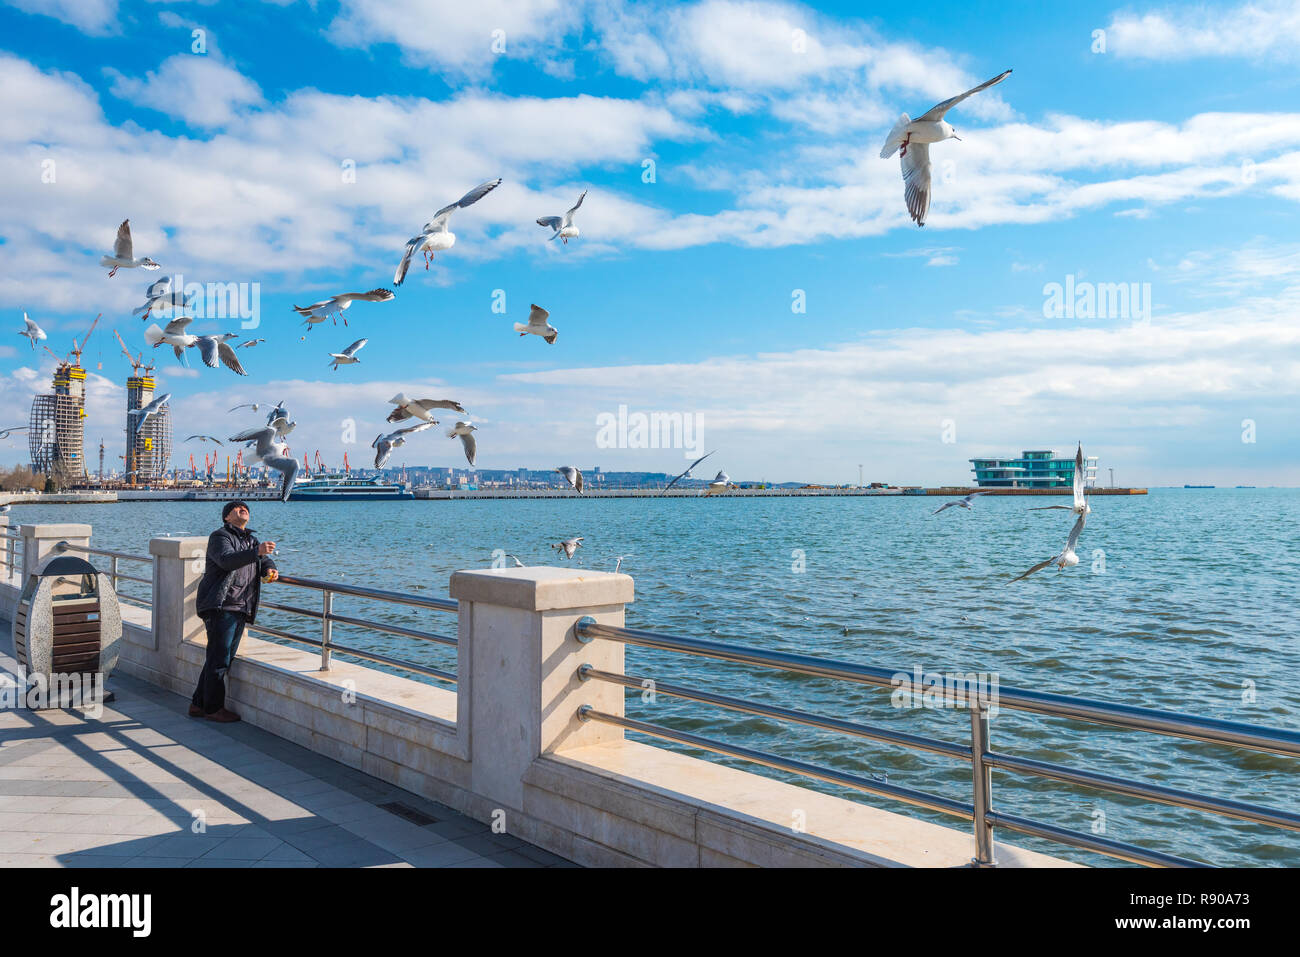 Baku/Azerbaijan - November 27, 2018. Man feeding seagulls on the boulevard Stock Photo